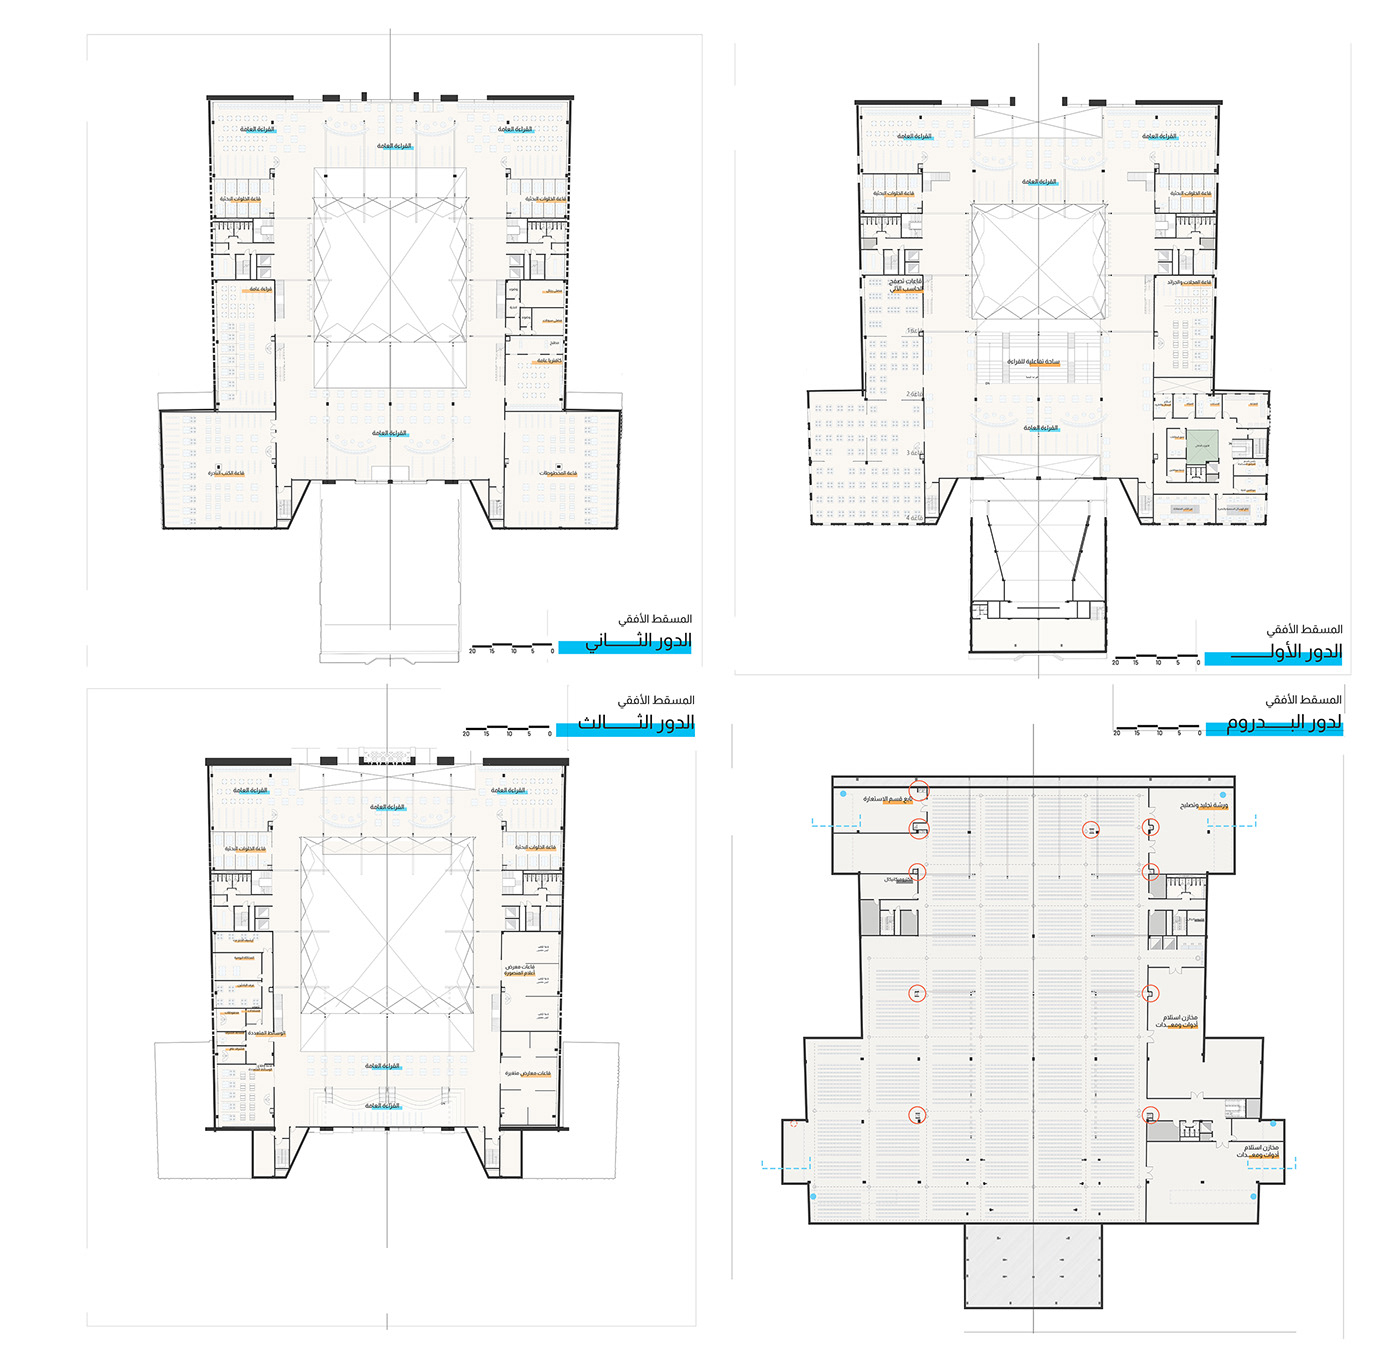 architecture Render visualization 3D graduation Project University library nadirmostafa pupliclibrary